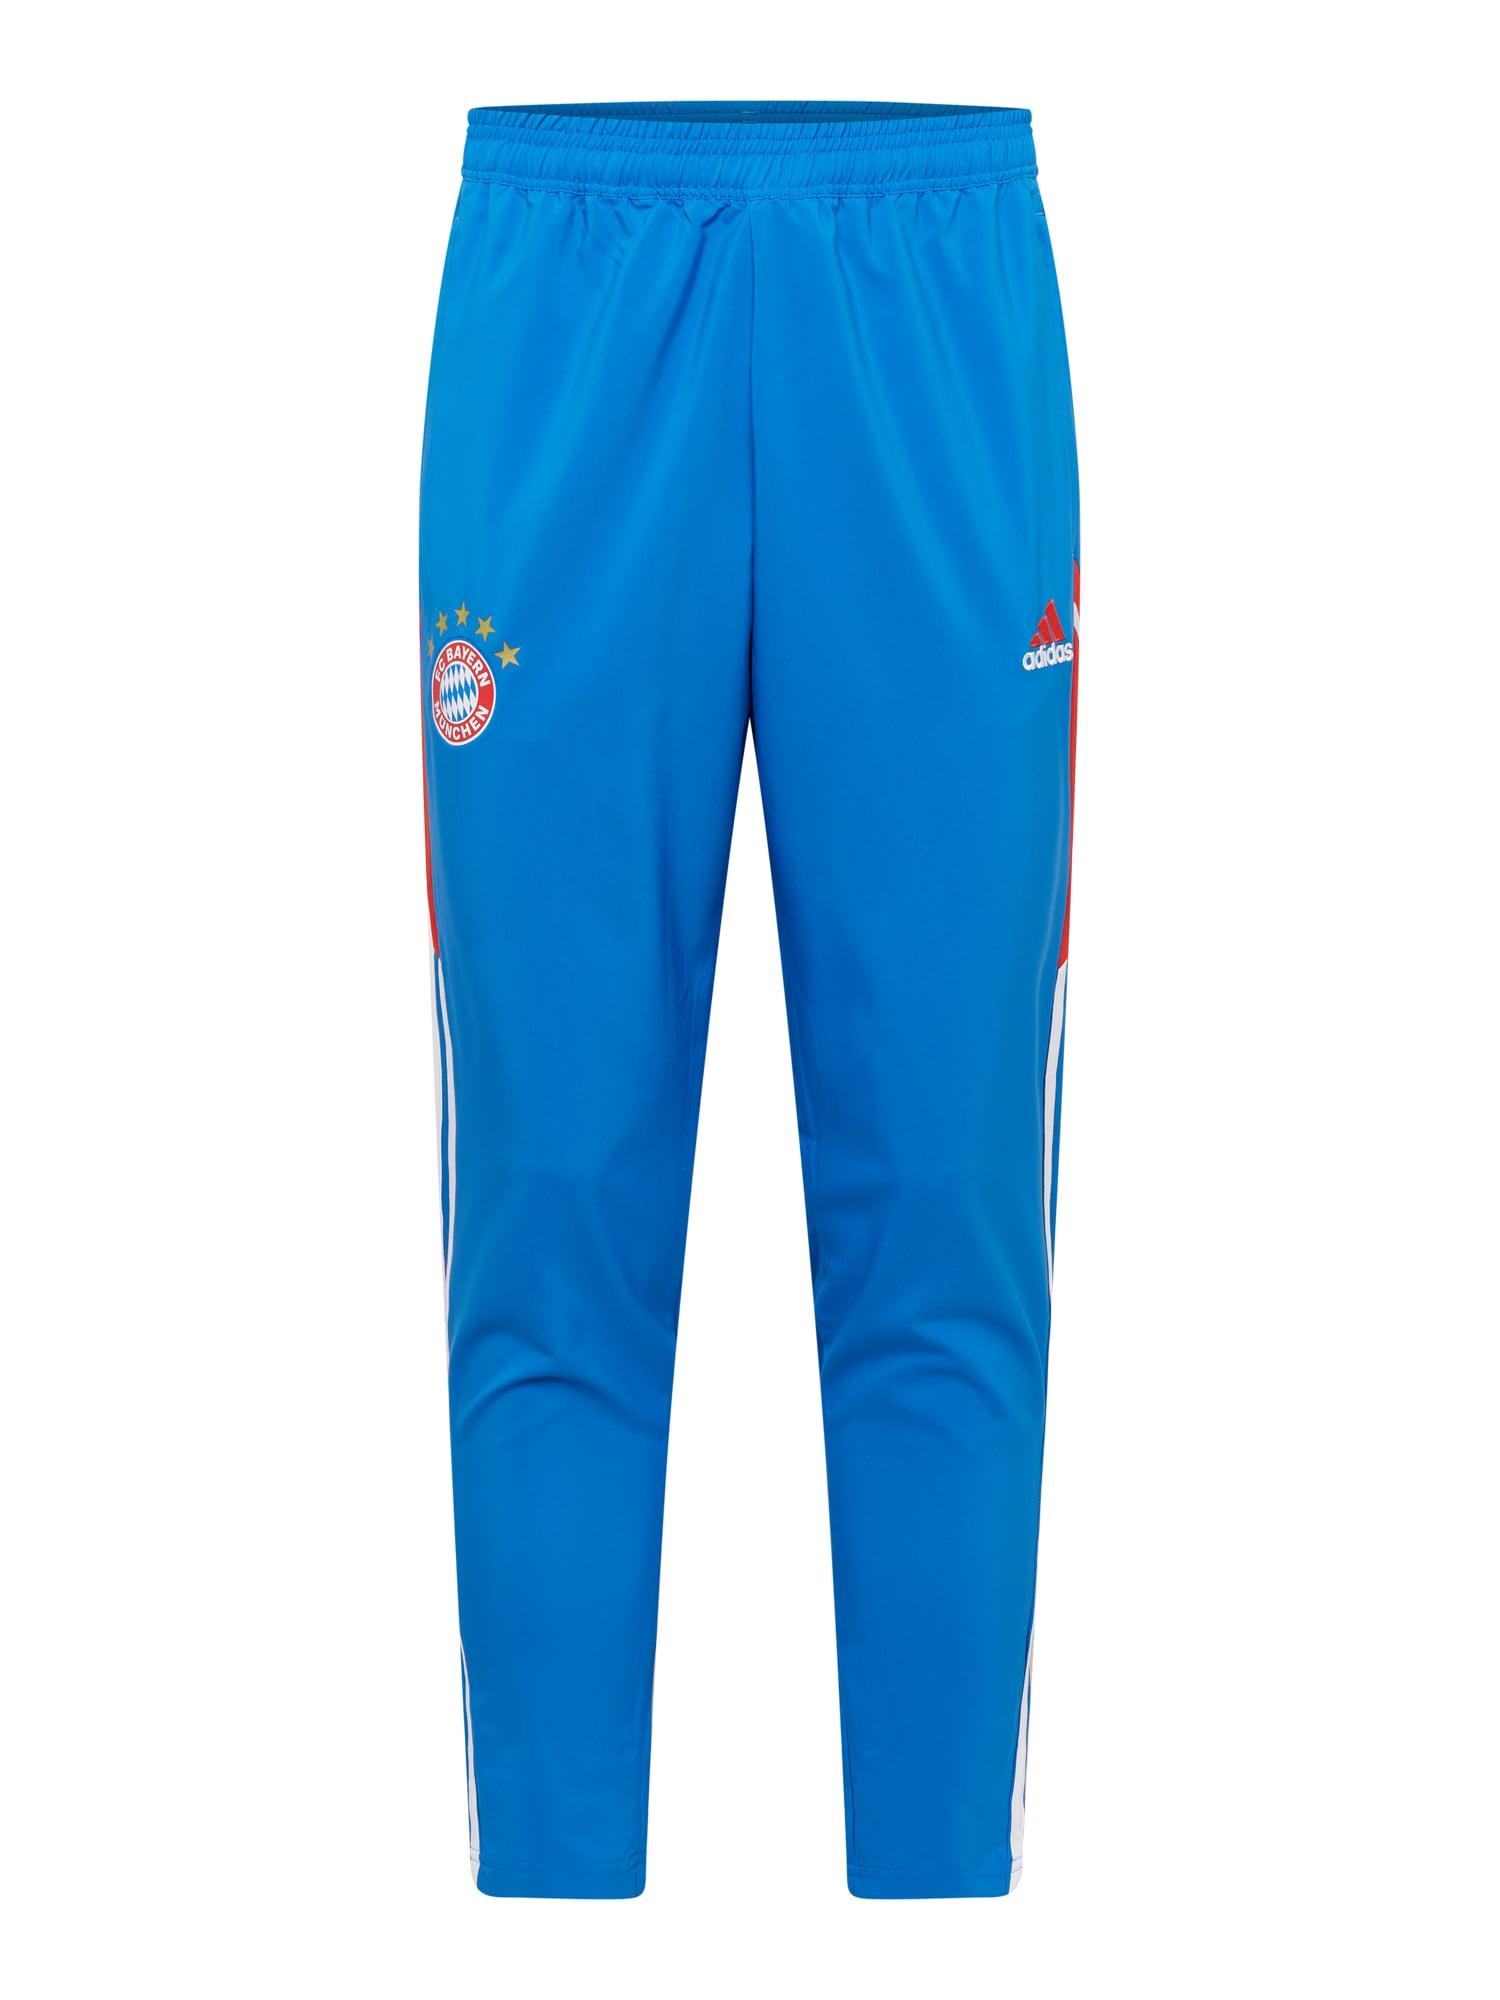 ADIDAS PERFORMANCE Športne hlače  kraljevo modra / mešane barve